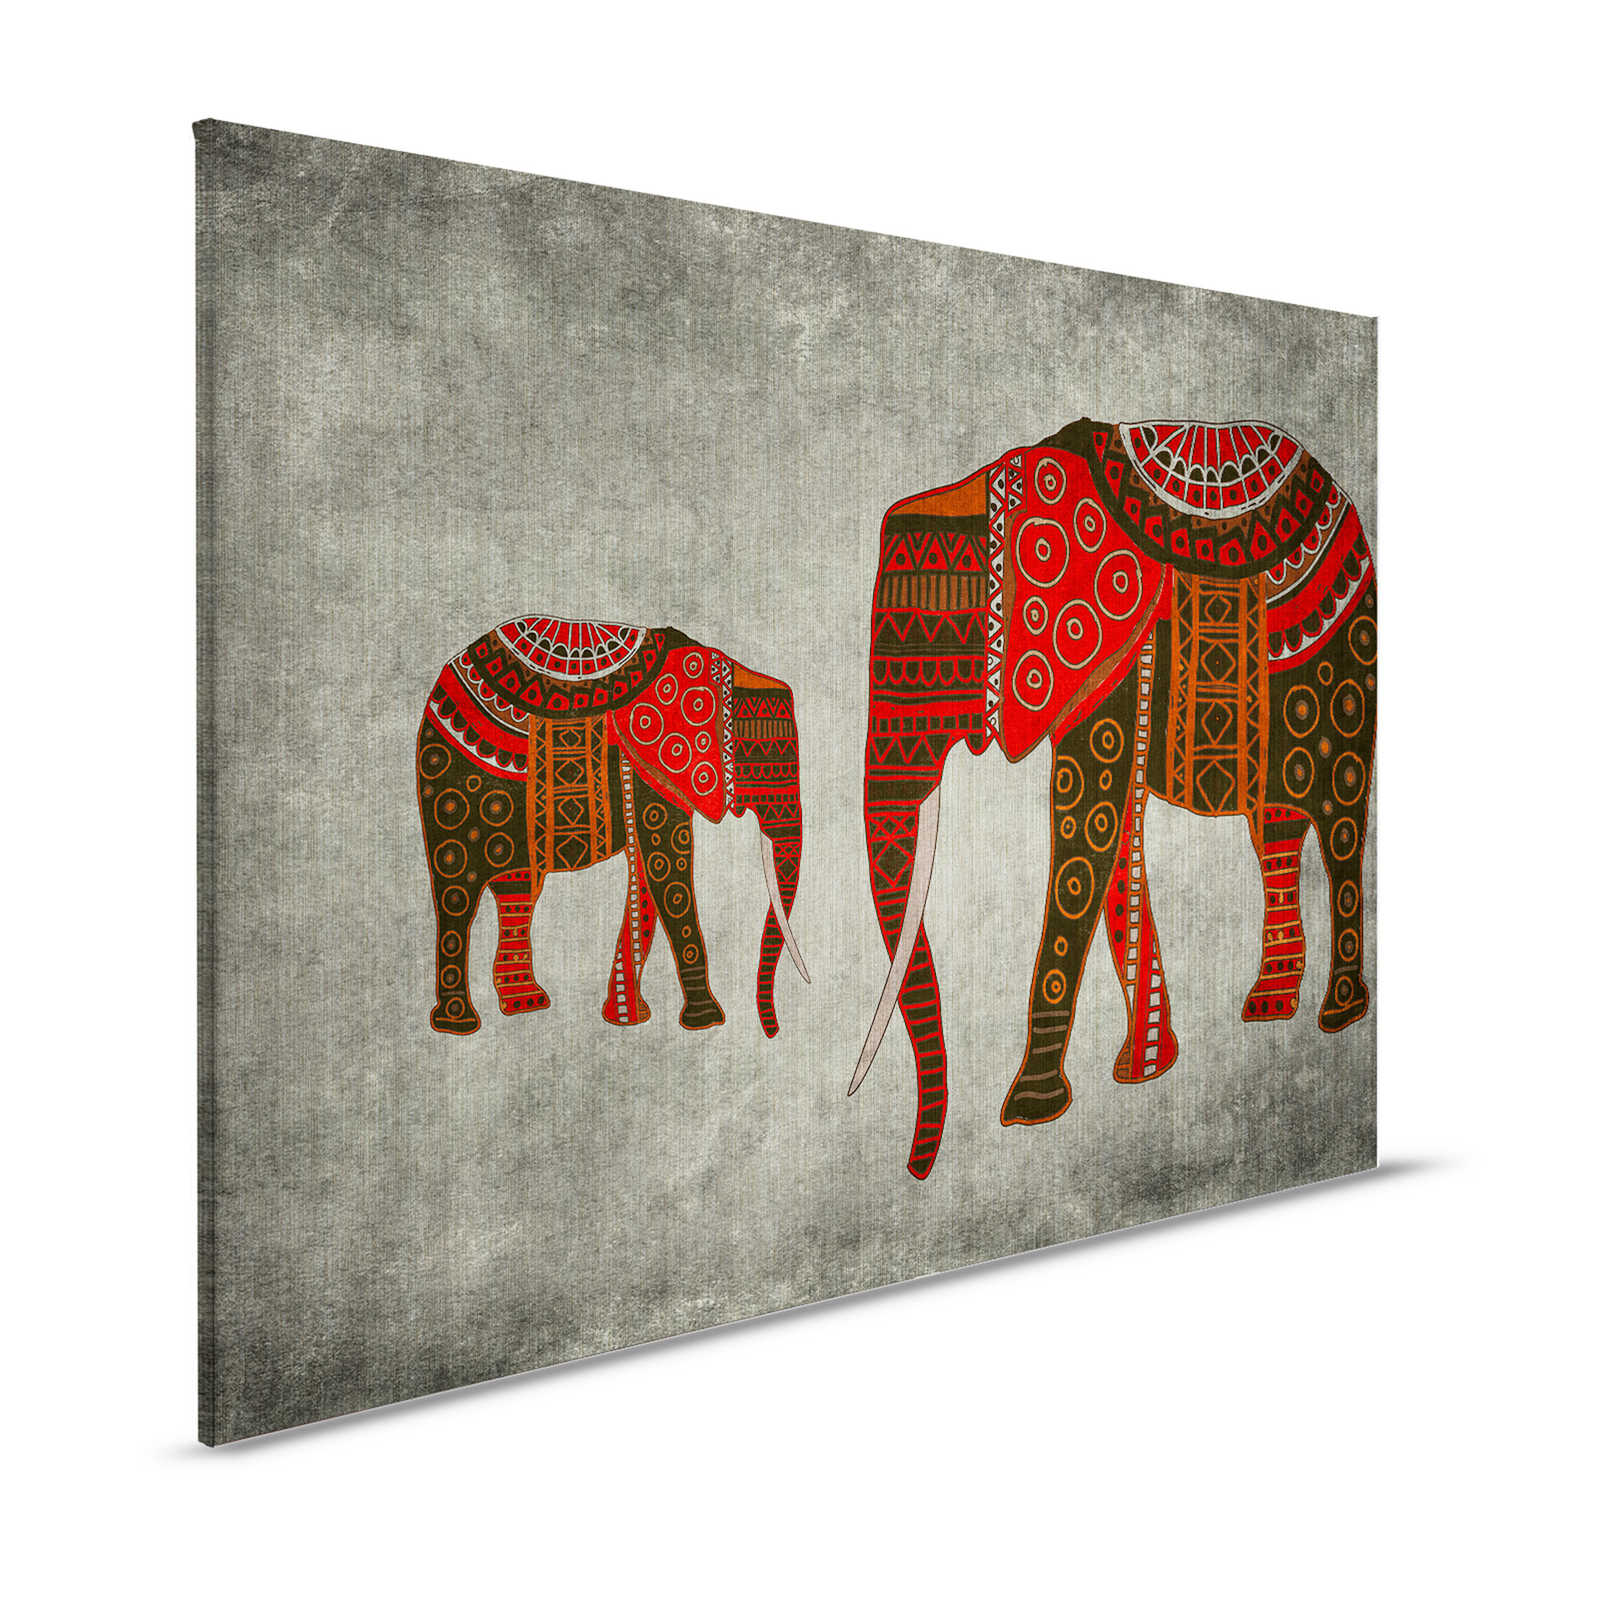 Nairobi 4 - Elefanti dipinti su tela con motivi etnici - 1,20 m x 0,80 m
